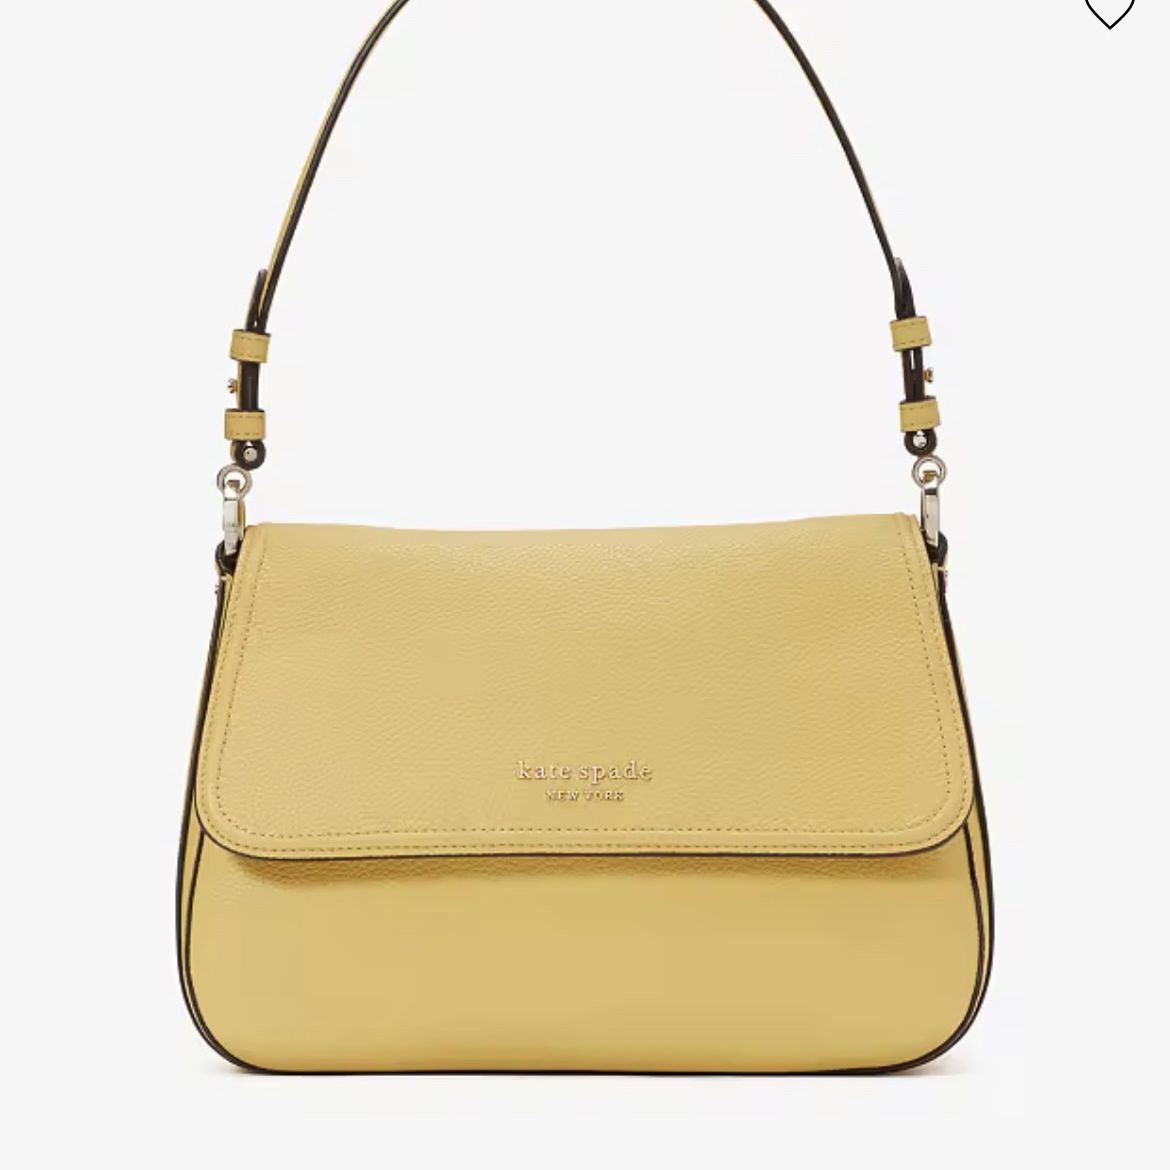 New Kate Spades Handbag